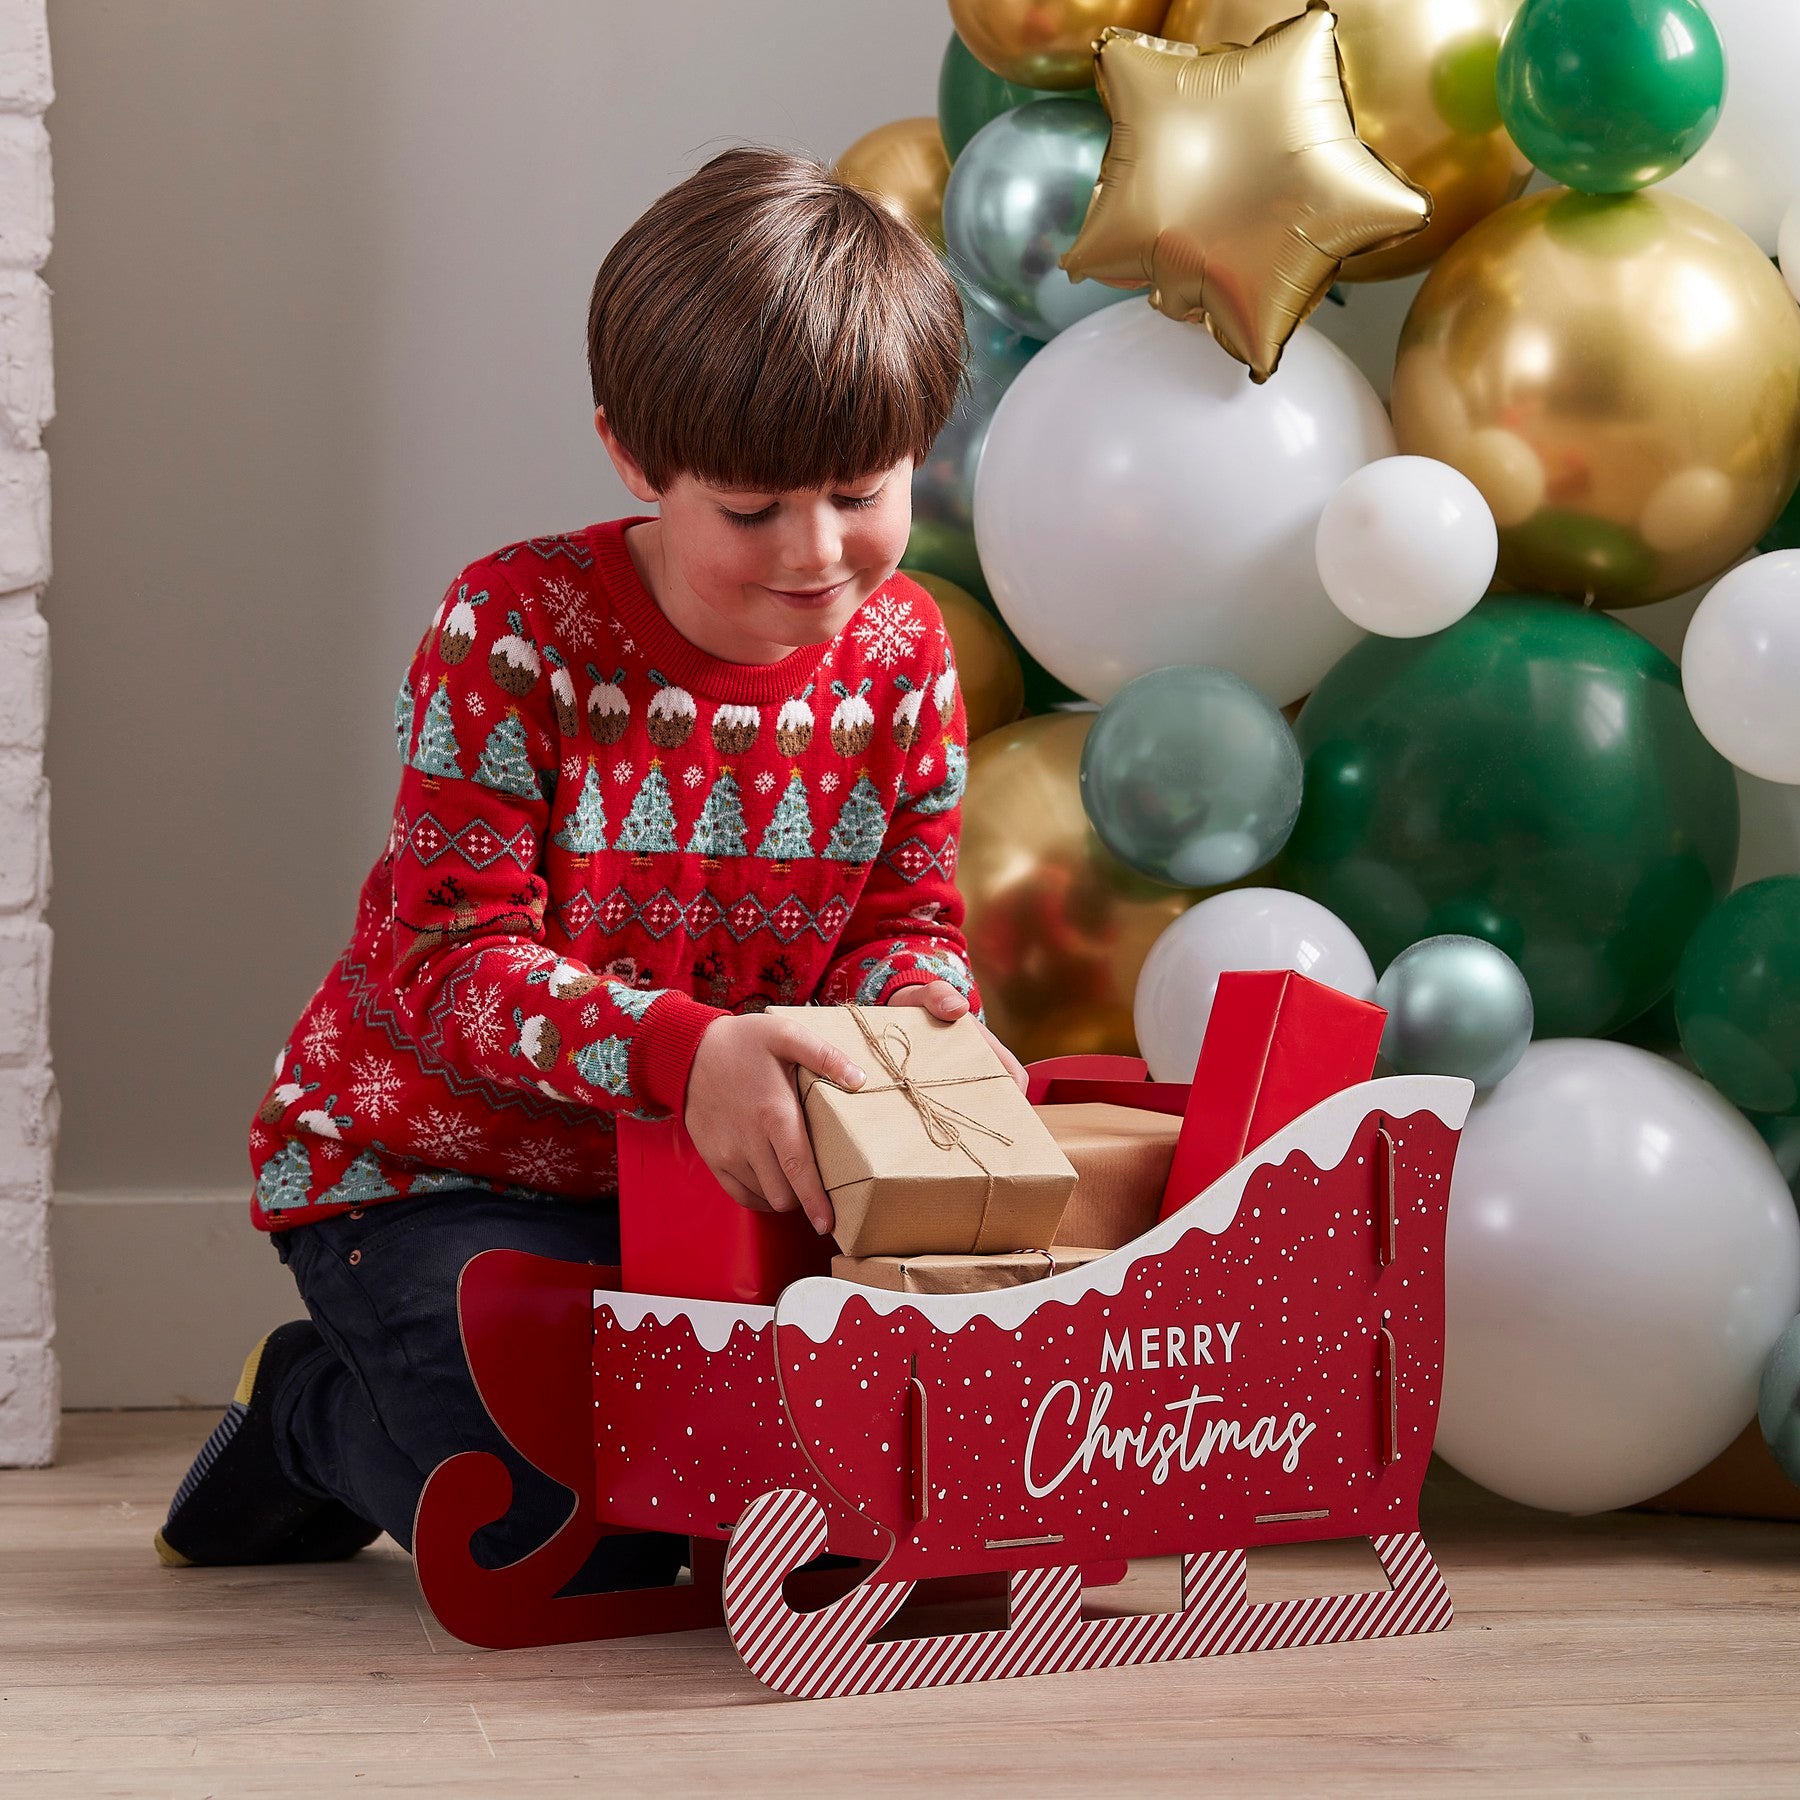 Cardboard sleigh for Christmas presents